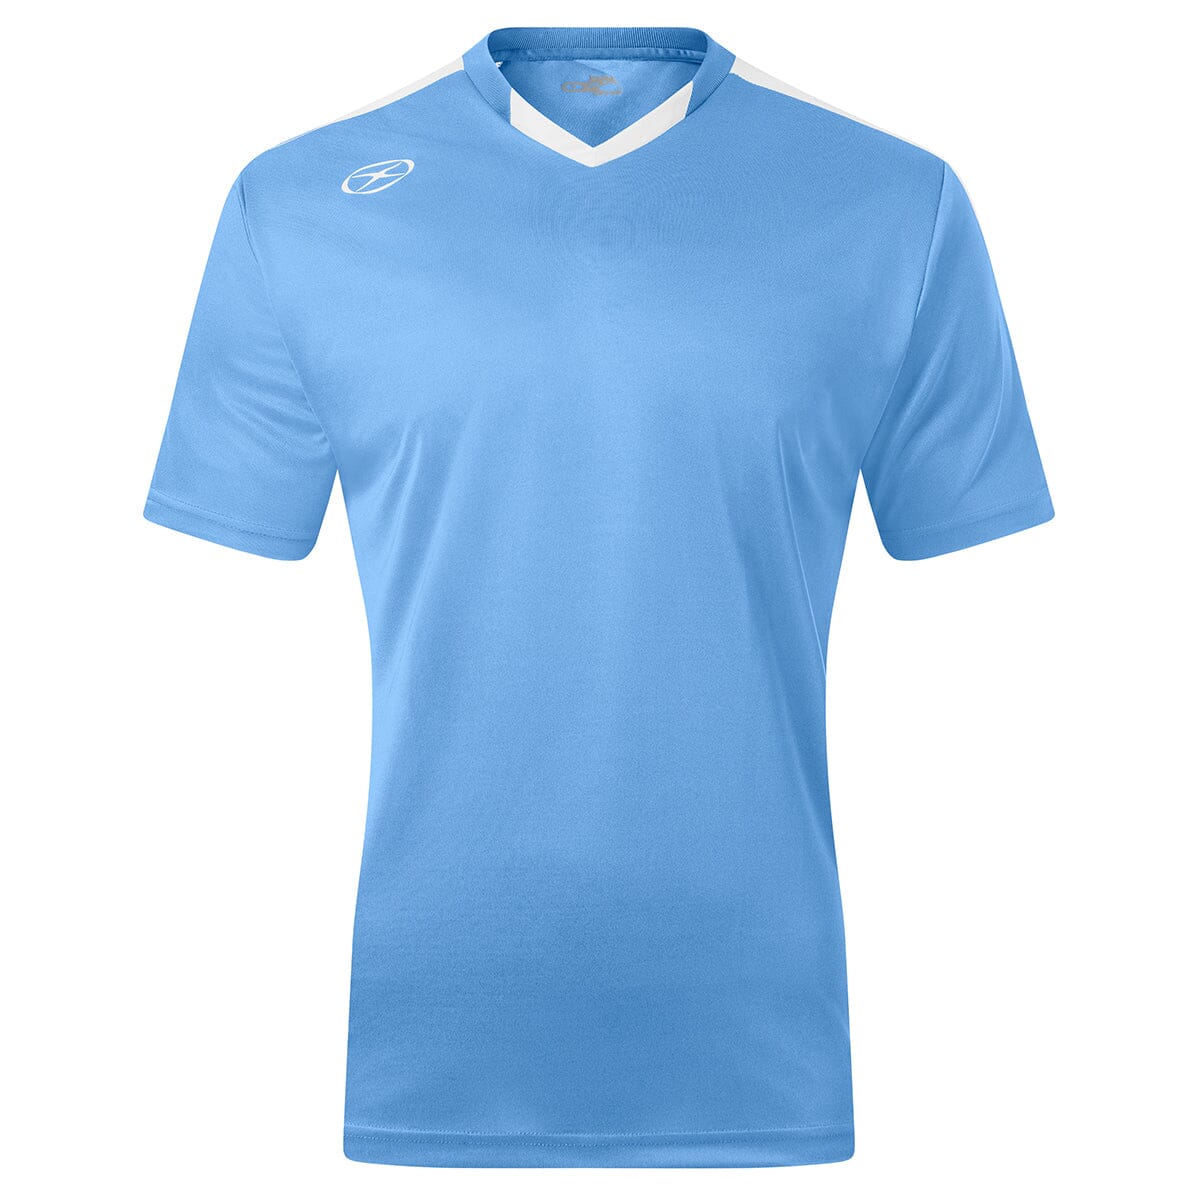 Britannia Jersey - Home Colors - Male Shirt Xara Soccer Columbia/White Youth Medium 